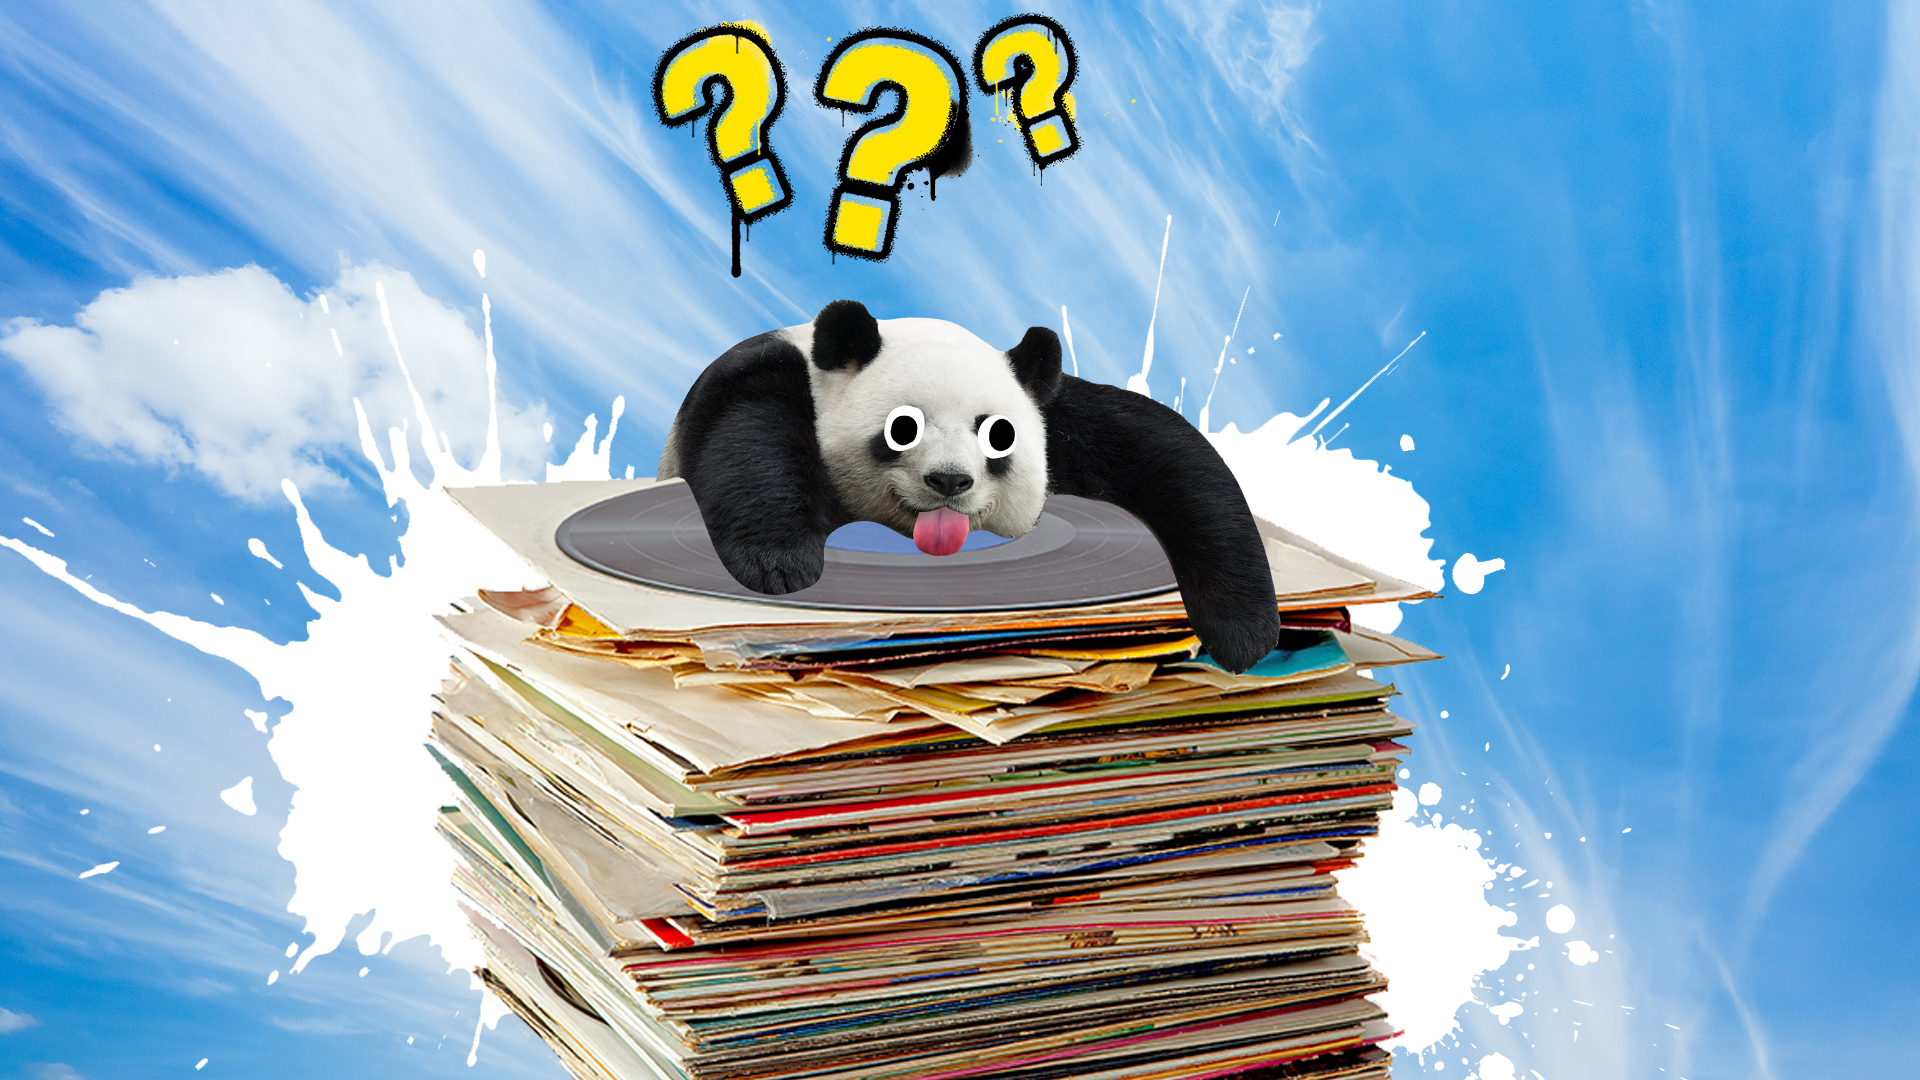 A panda lies on a pile of vinyl records